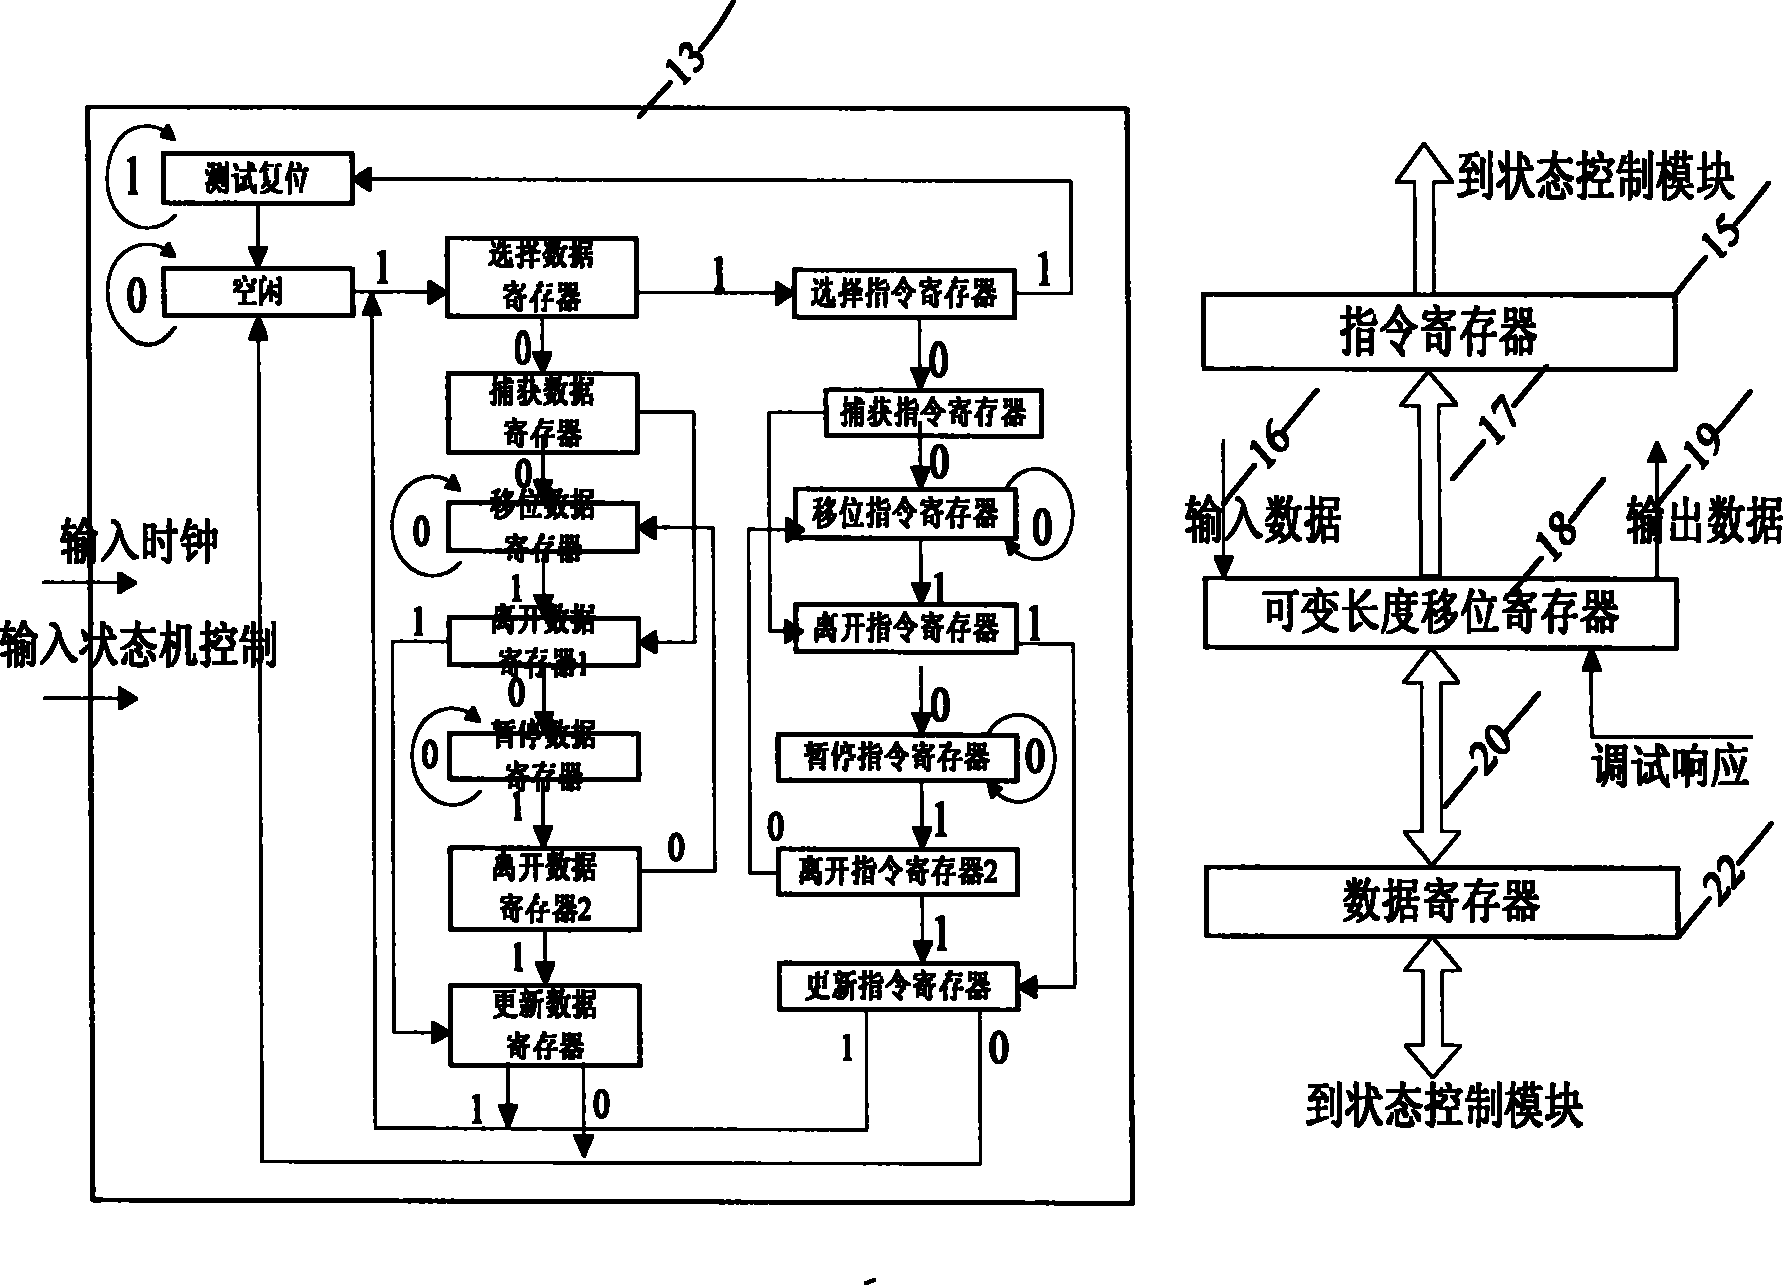 A Microcontroller Embedded Online Simulation Debugging System